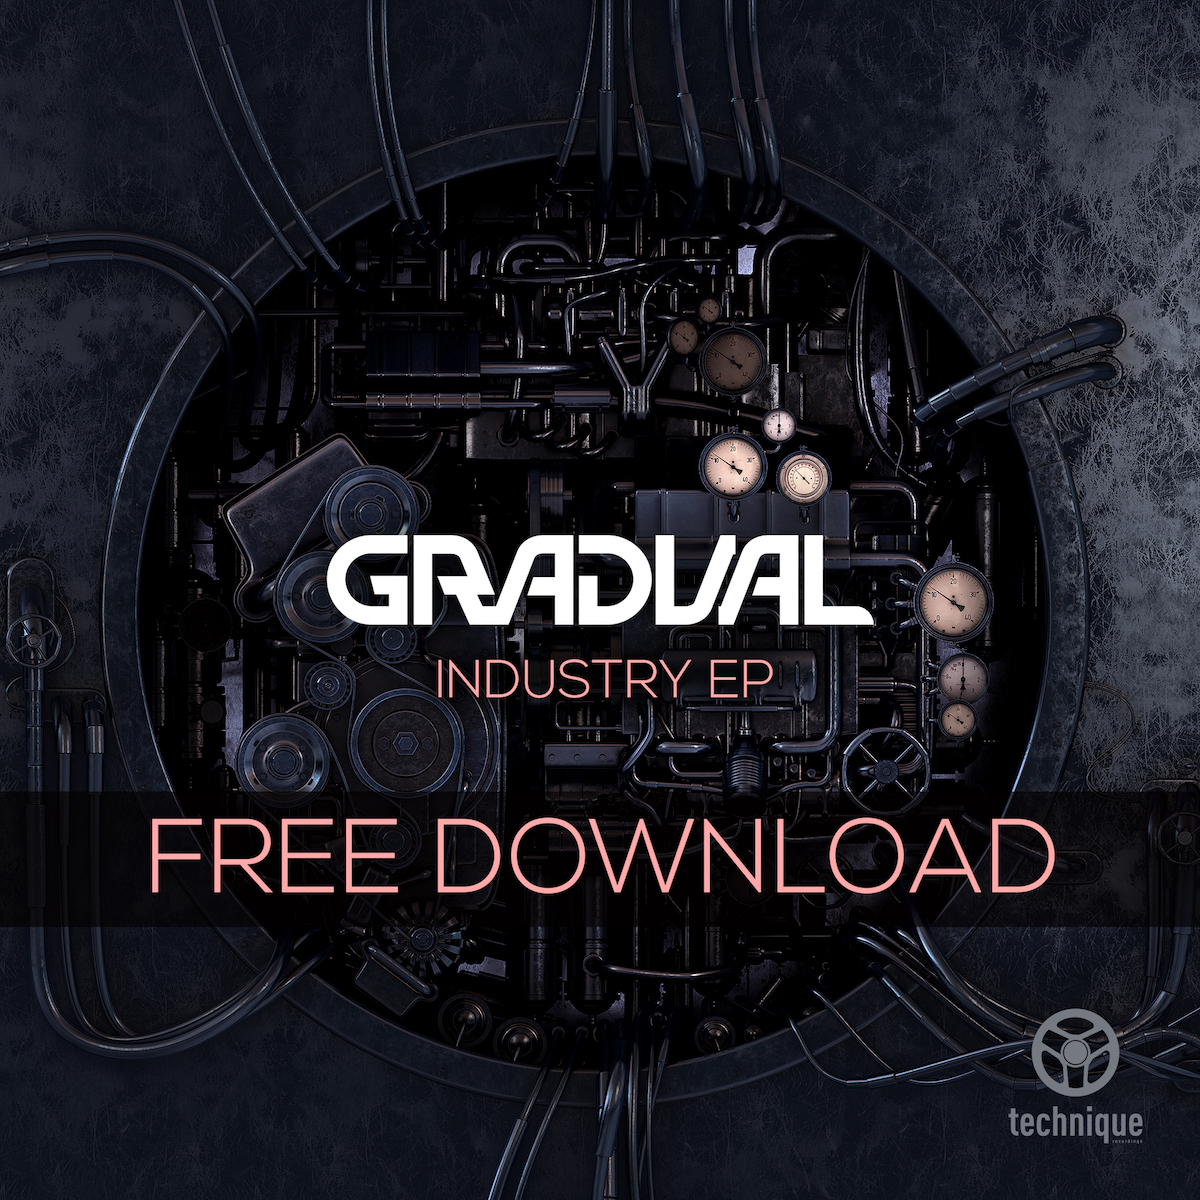 Gradual - Industry EP [Technique Free EP]	